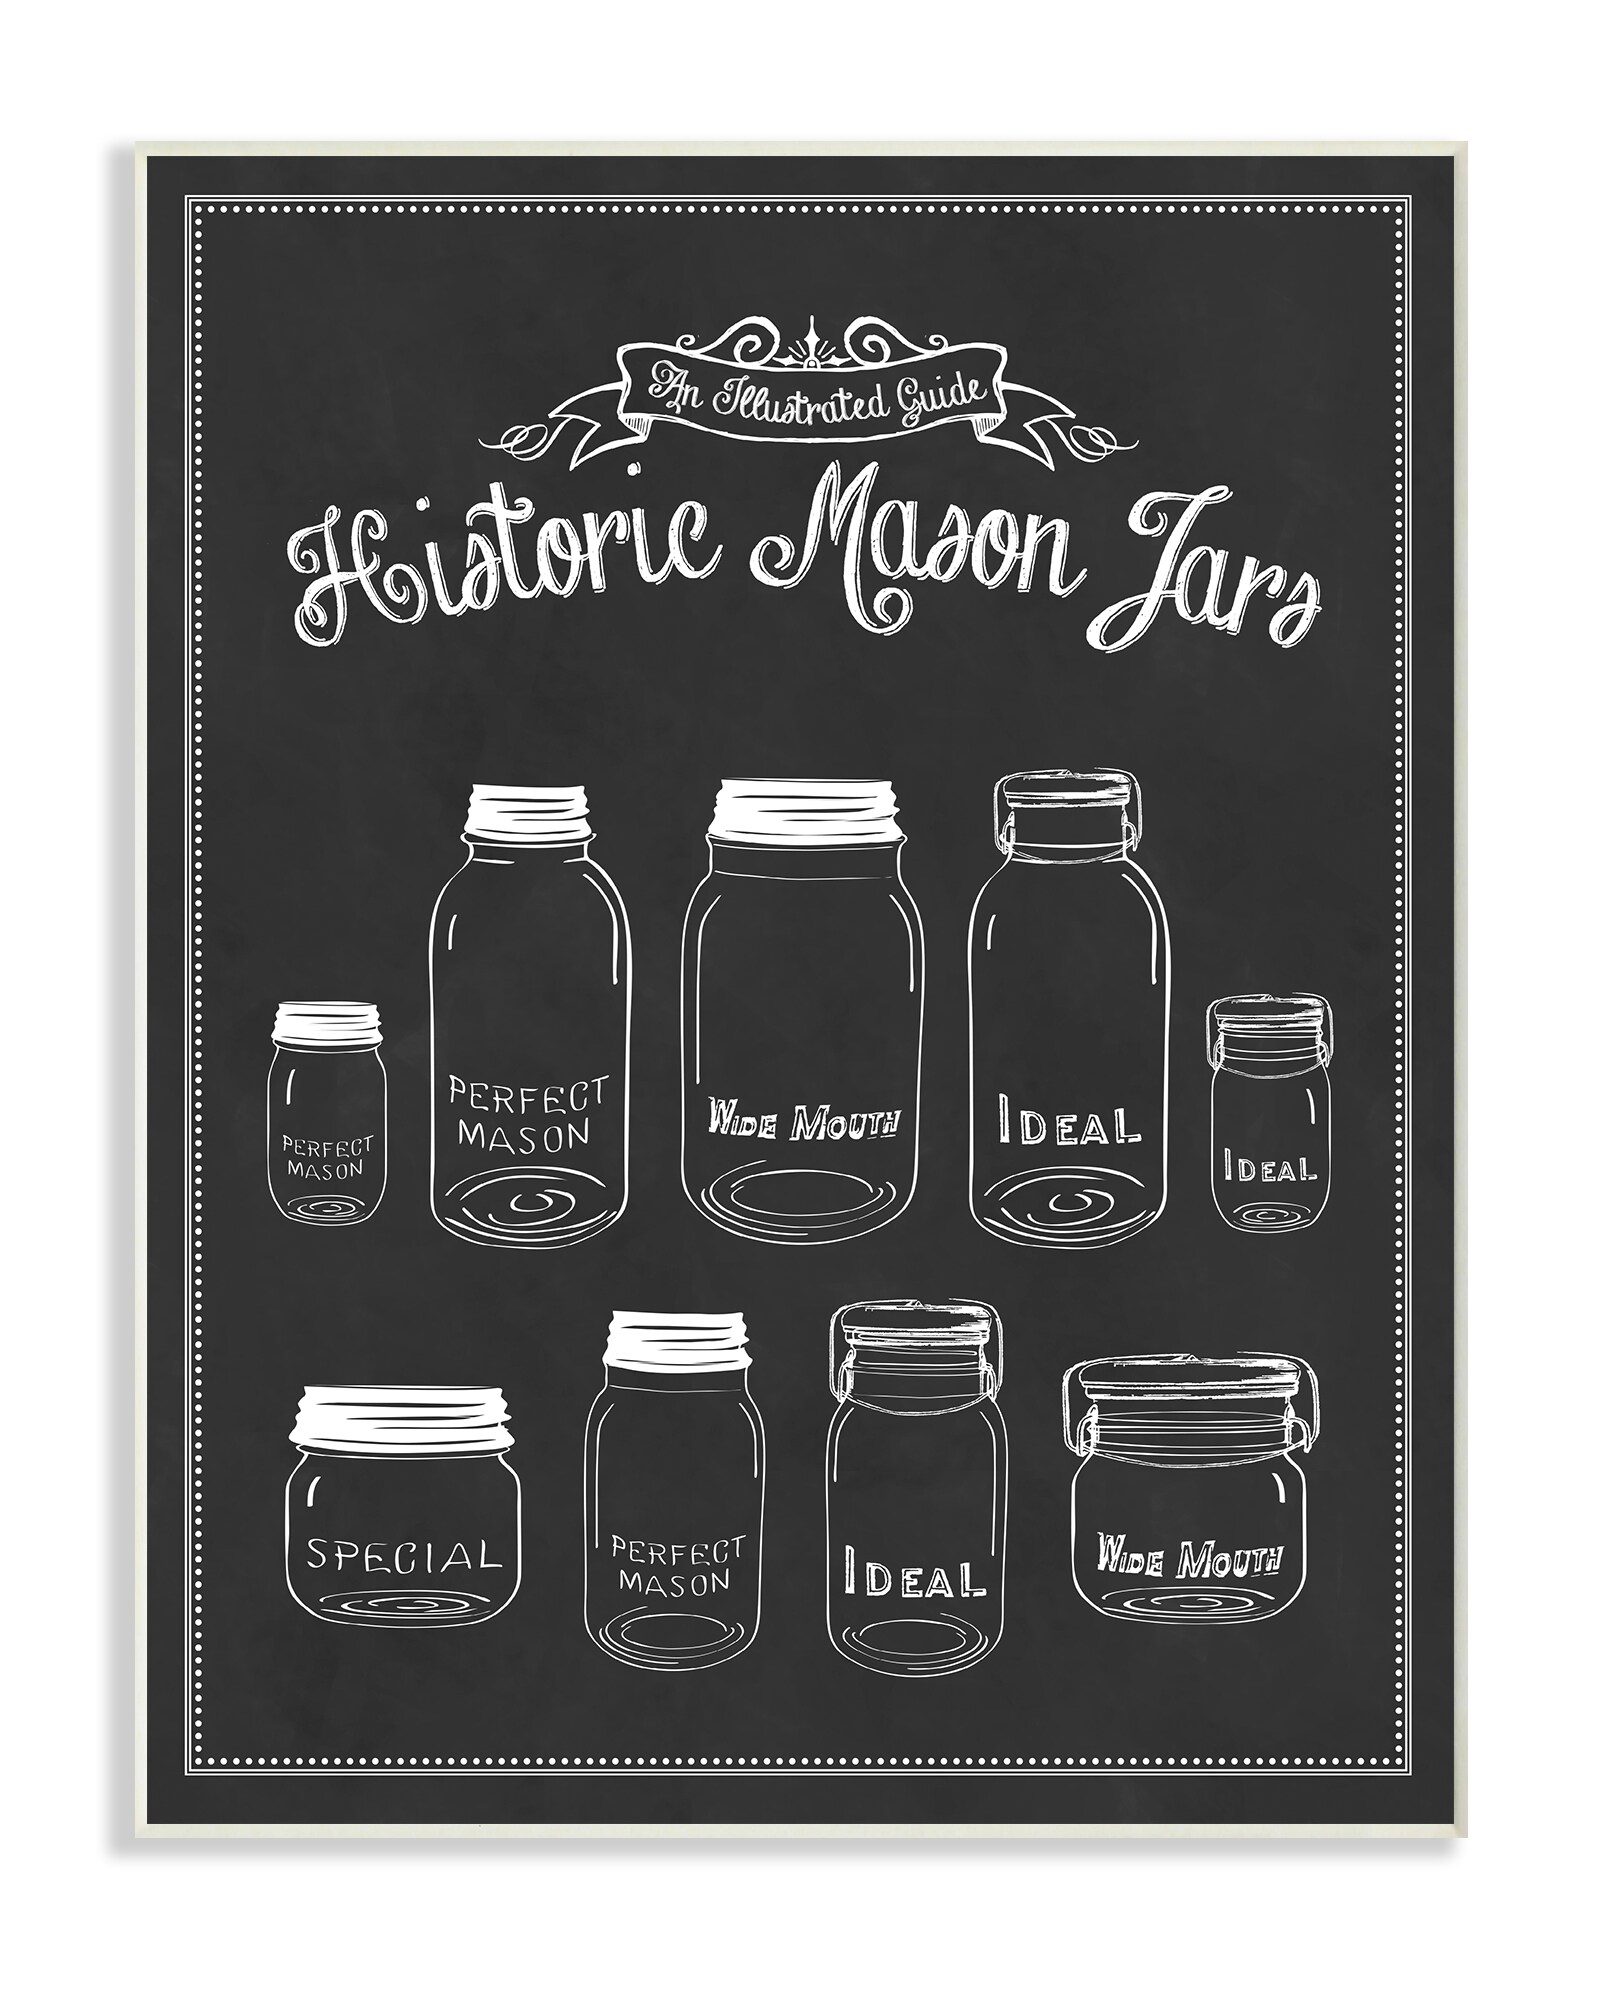 Darware Farmhouse Black Mason Jars (Set of 2); Home Decor and Storage Wide  Mouth Decorative Wide Mouth Mason Jars, Black-Painted